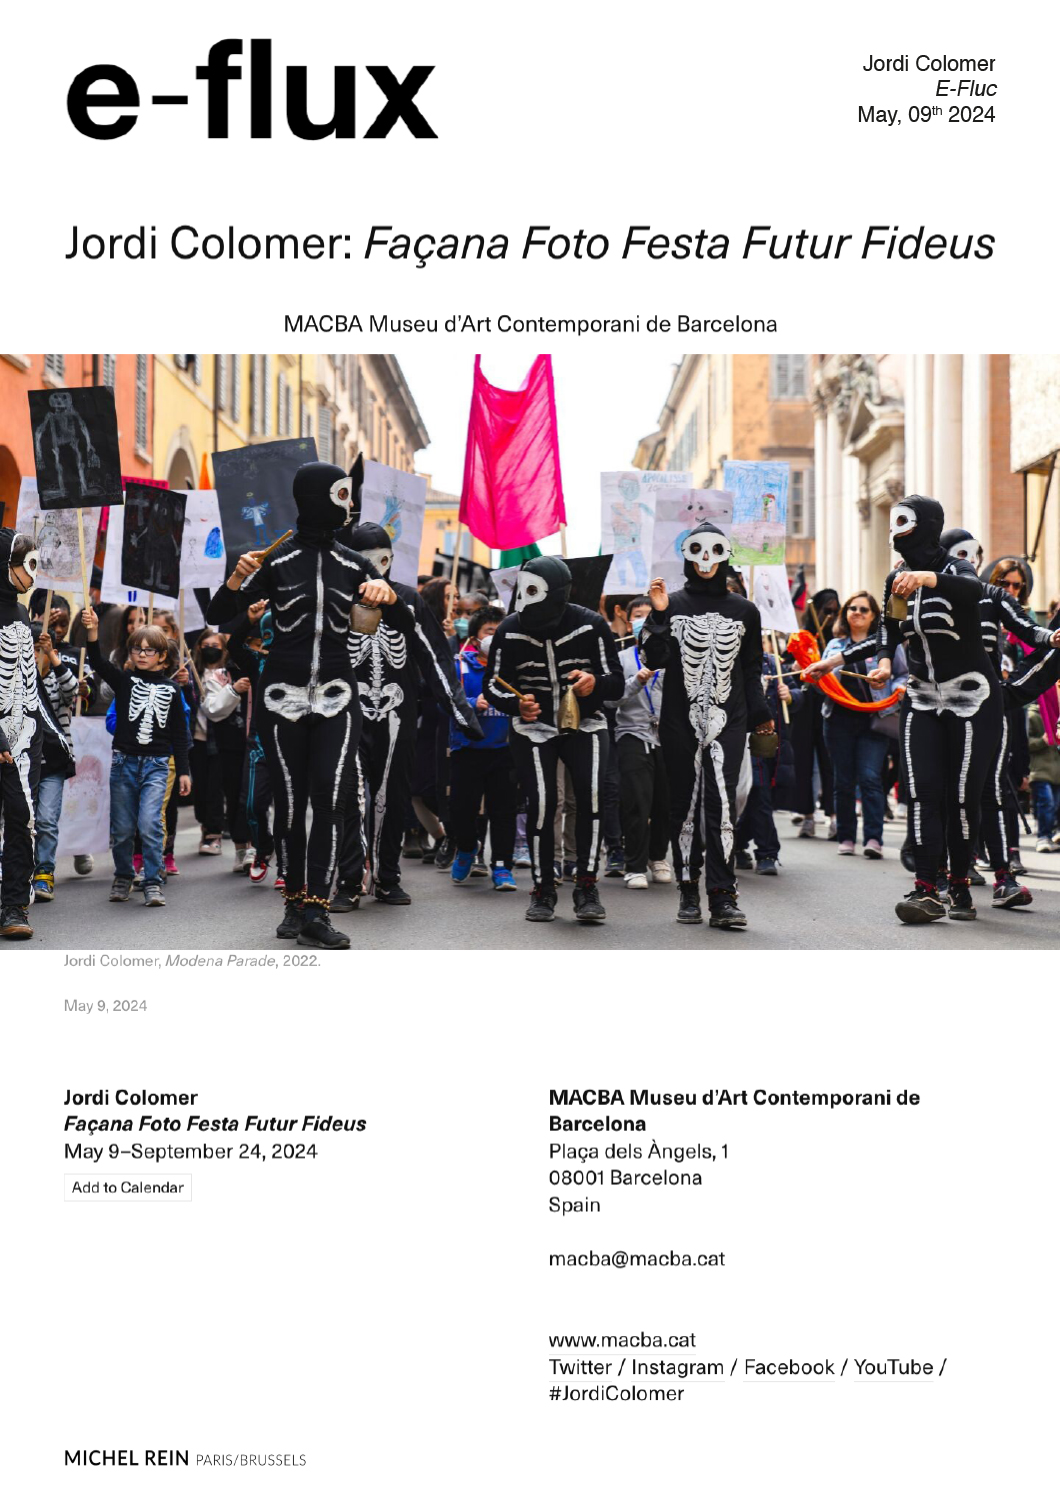 Jordi Colomer: Faana Foto Festa Futur Fideus - e-flux